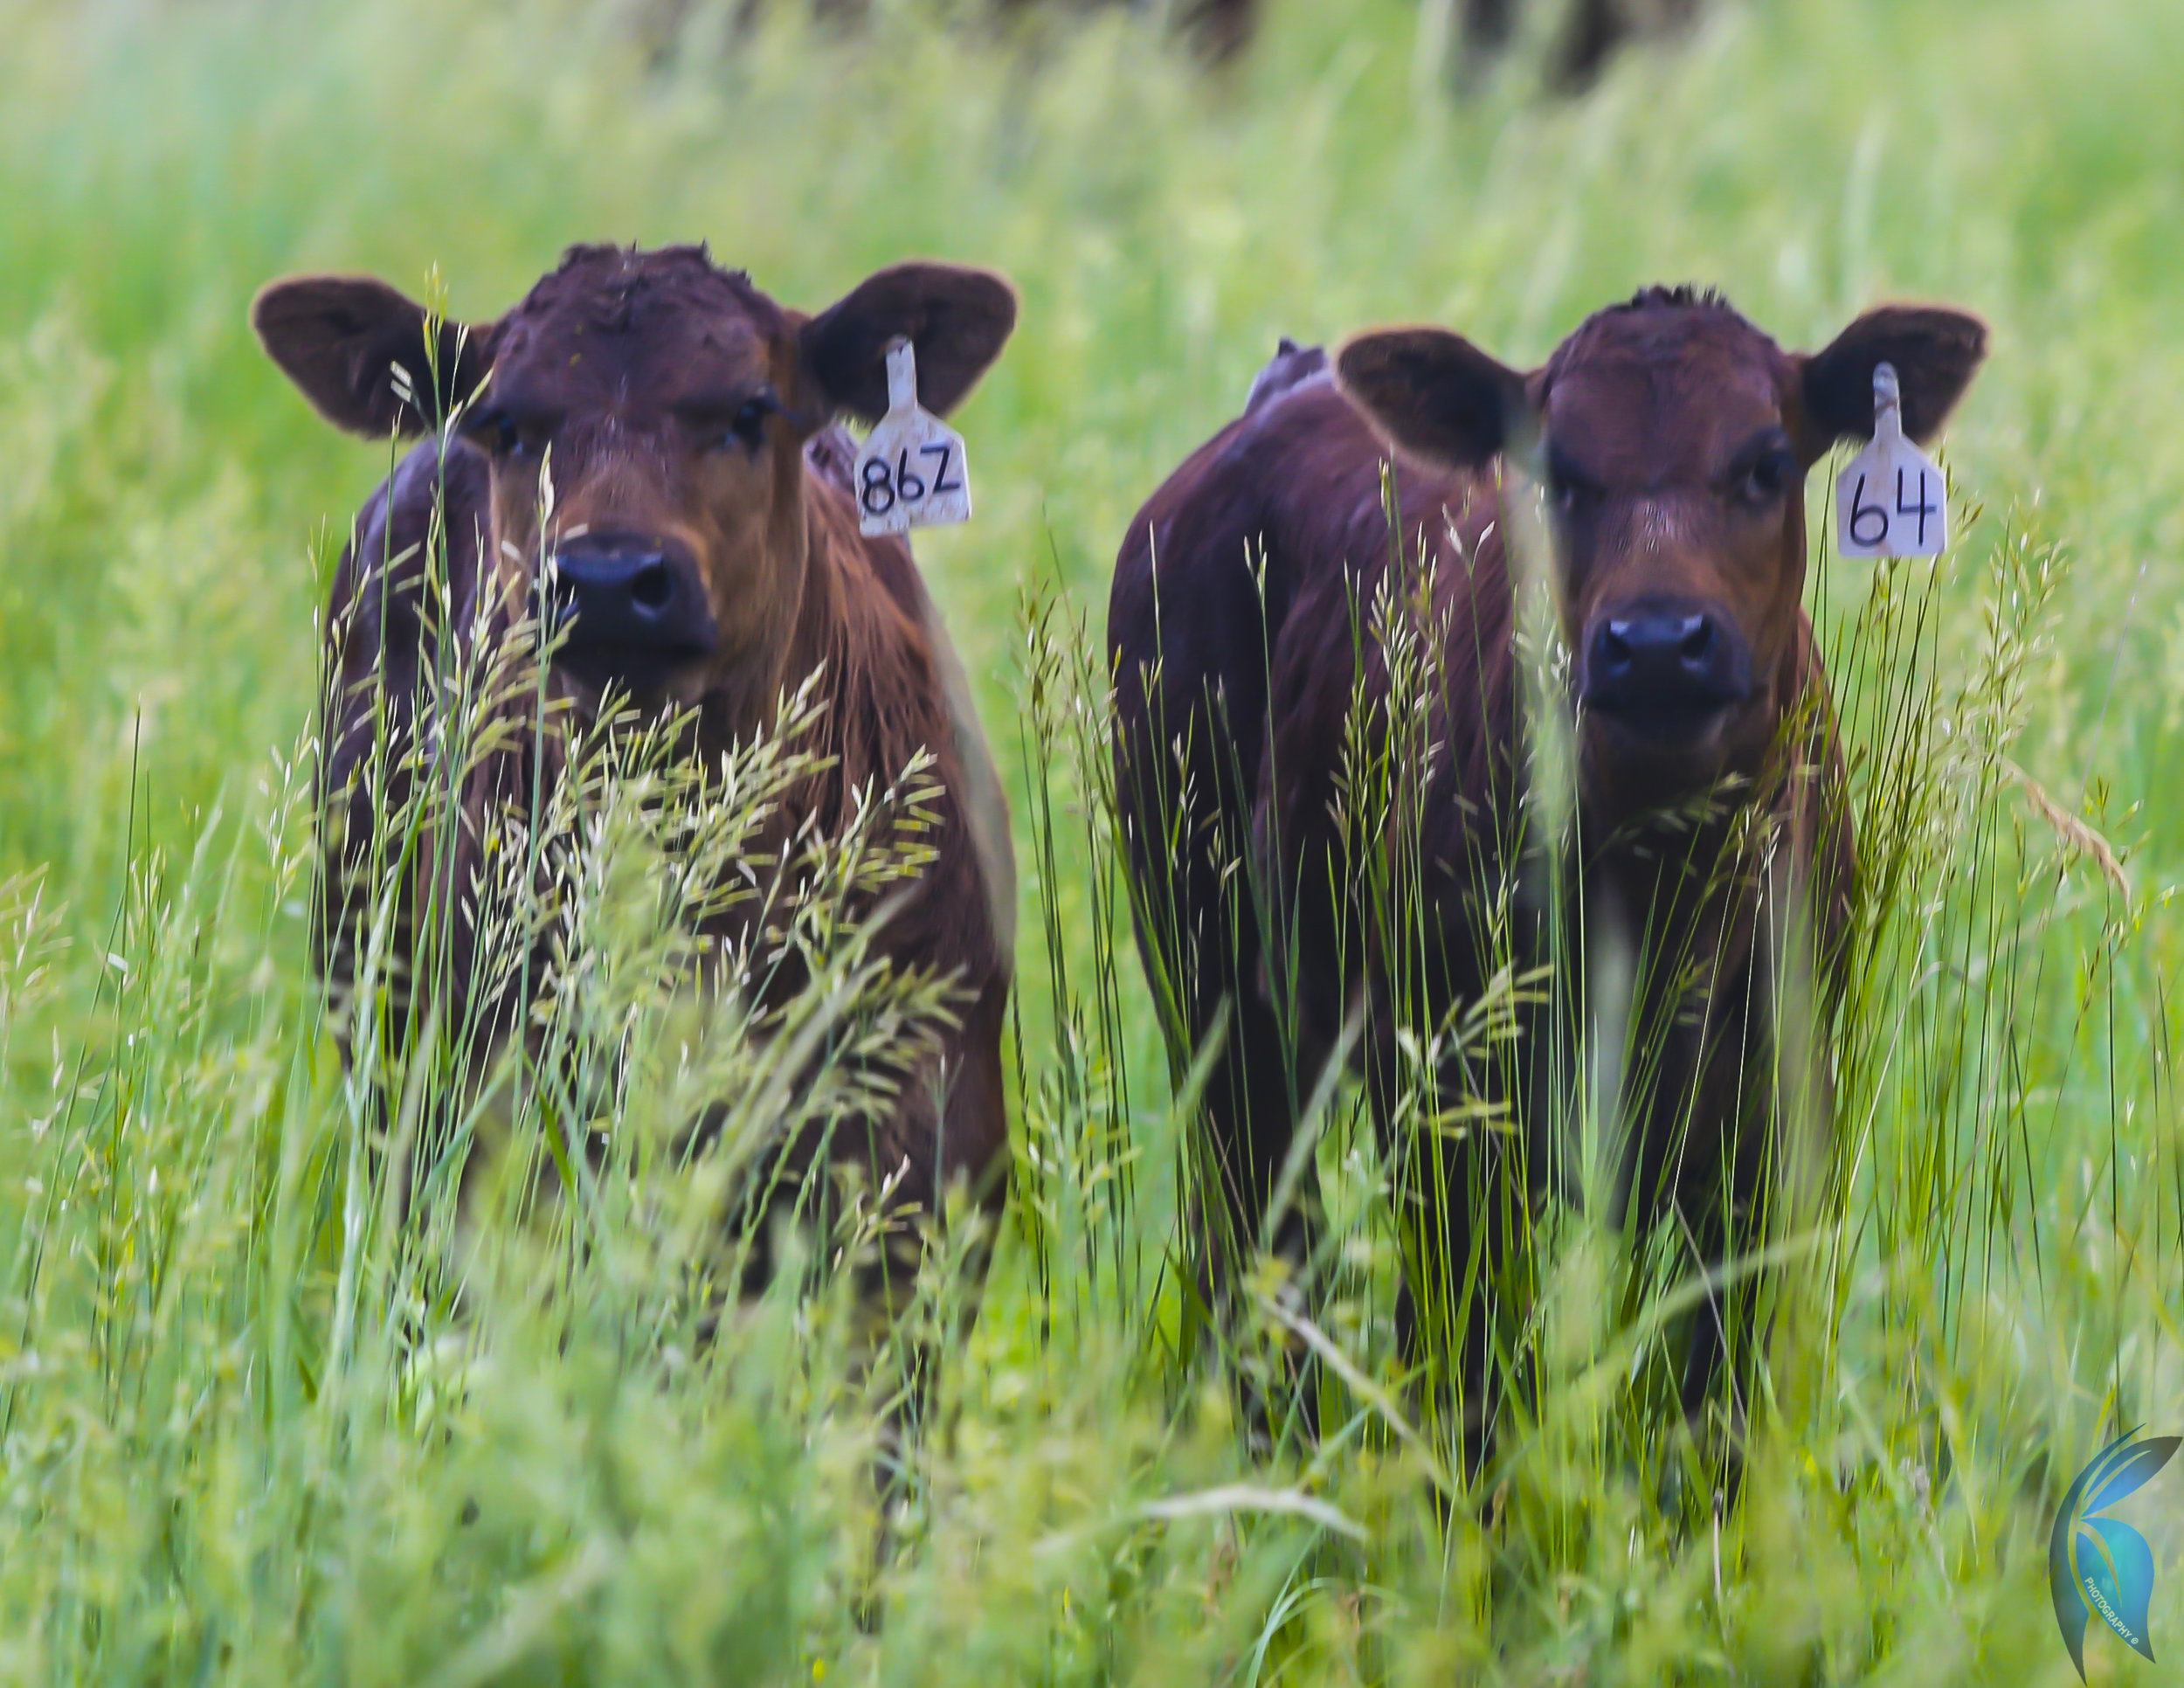 Calves On Grass